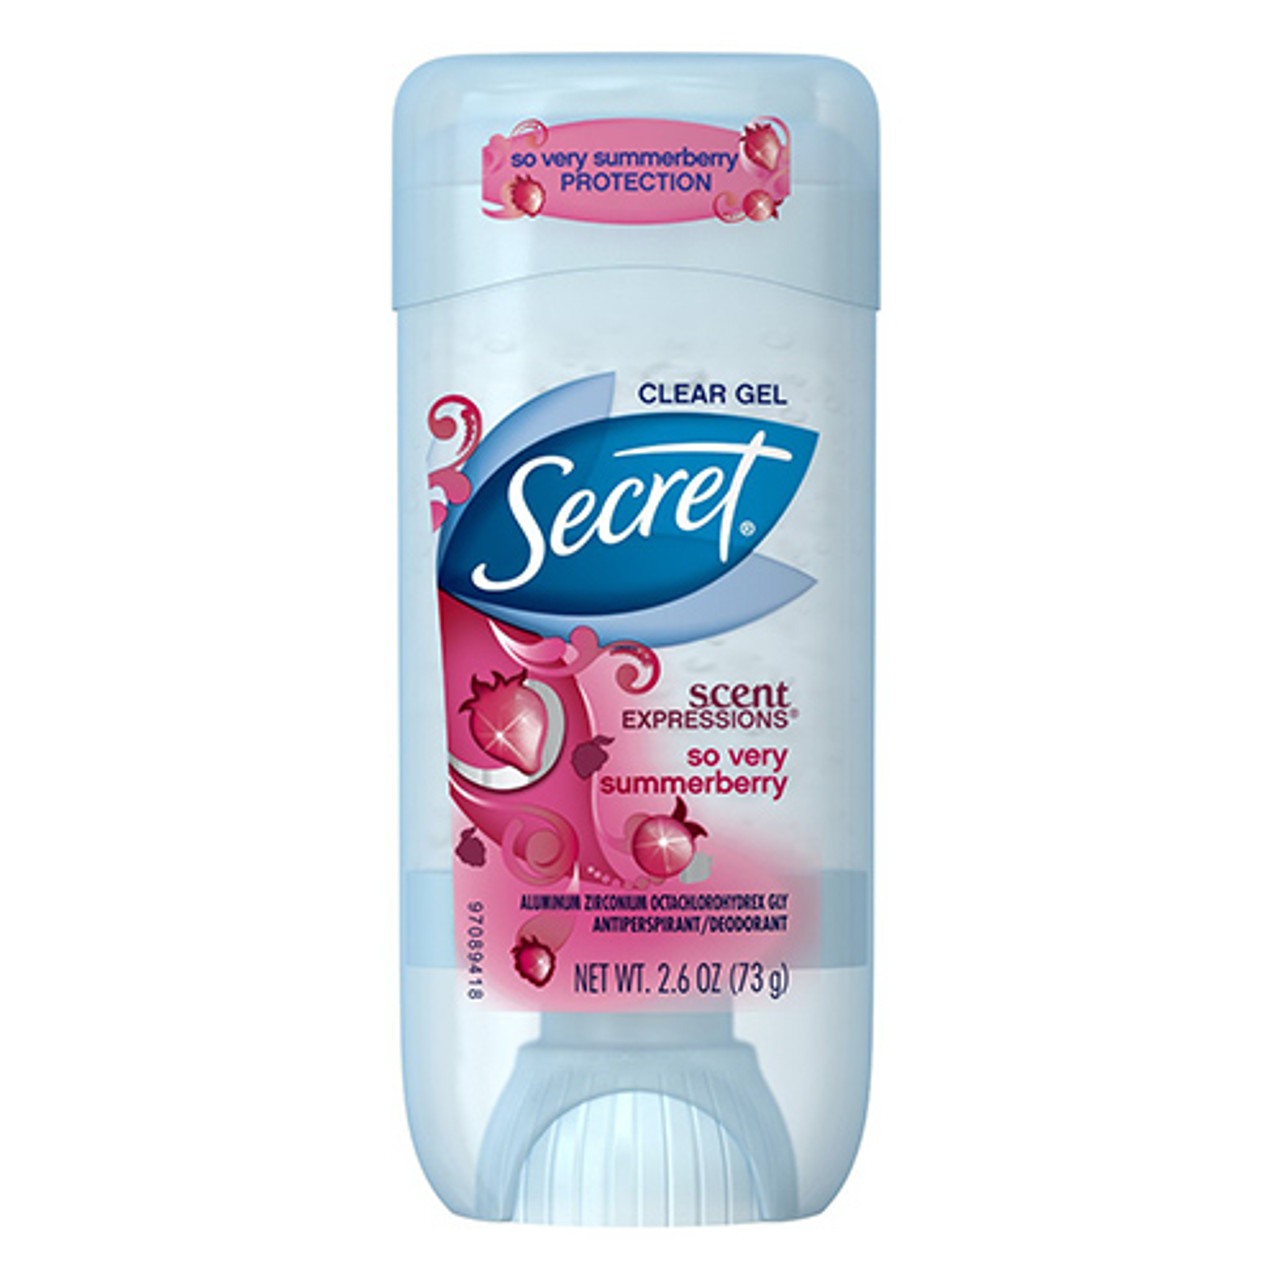 Secret Scent Expressions Clear Gel Antiperspirant and Deodorant, 2.7 Oz 